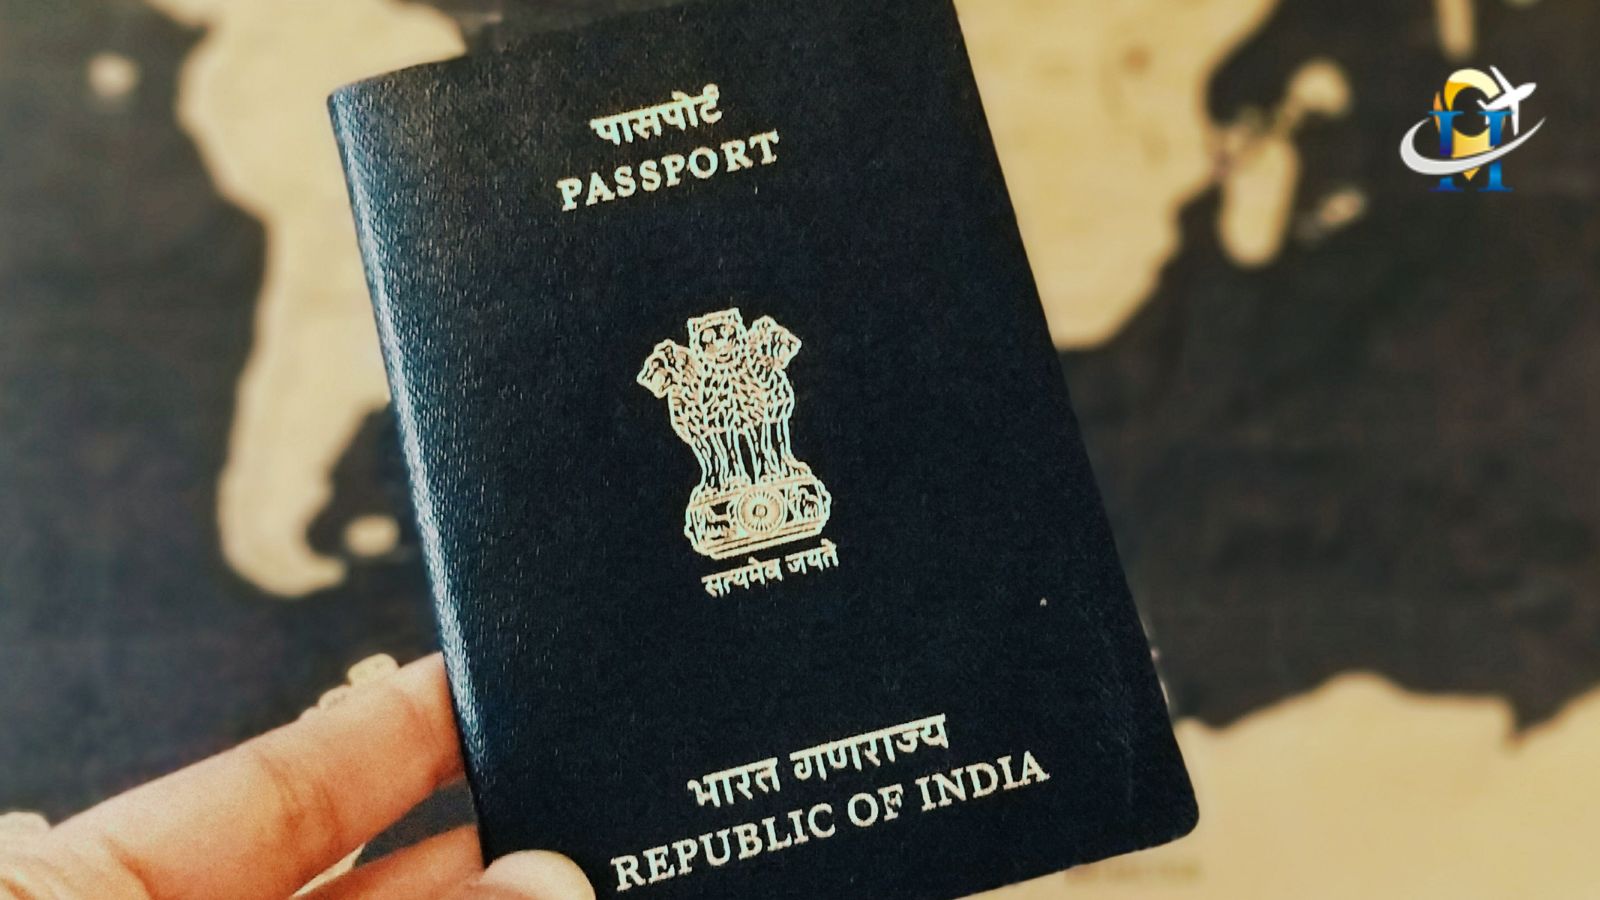 World Most Powerful Passport 2022: Revealed world's most powerful passports  in 2022! India secures 87th spot